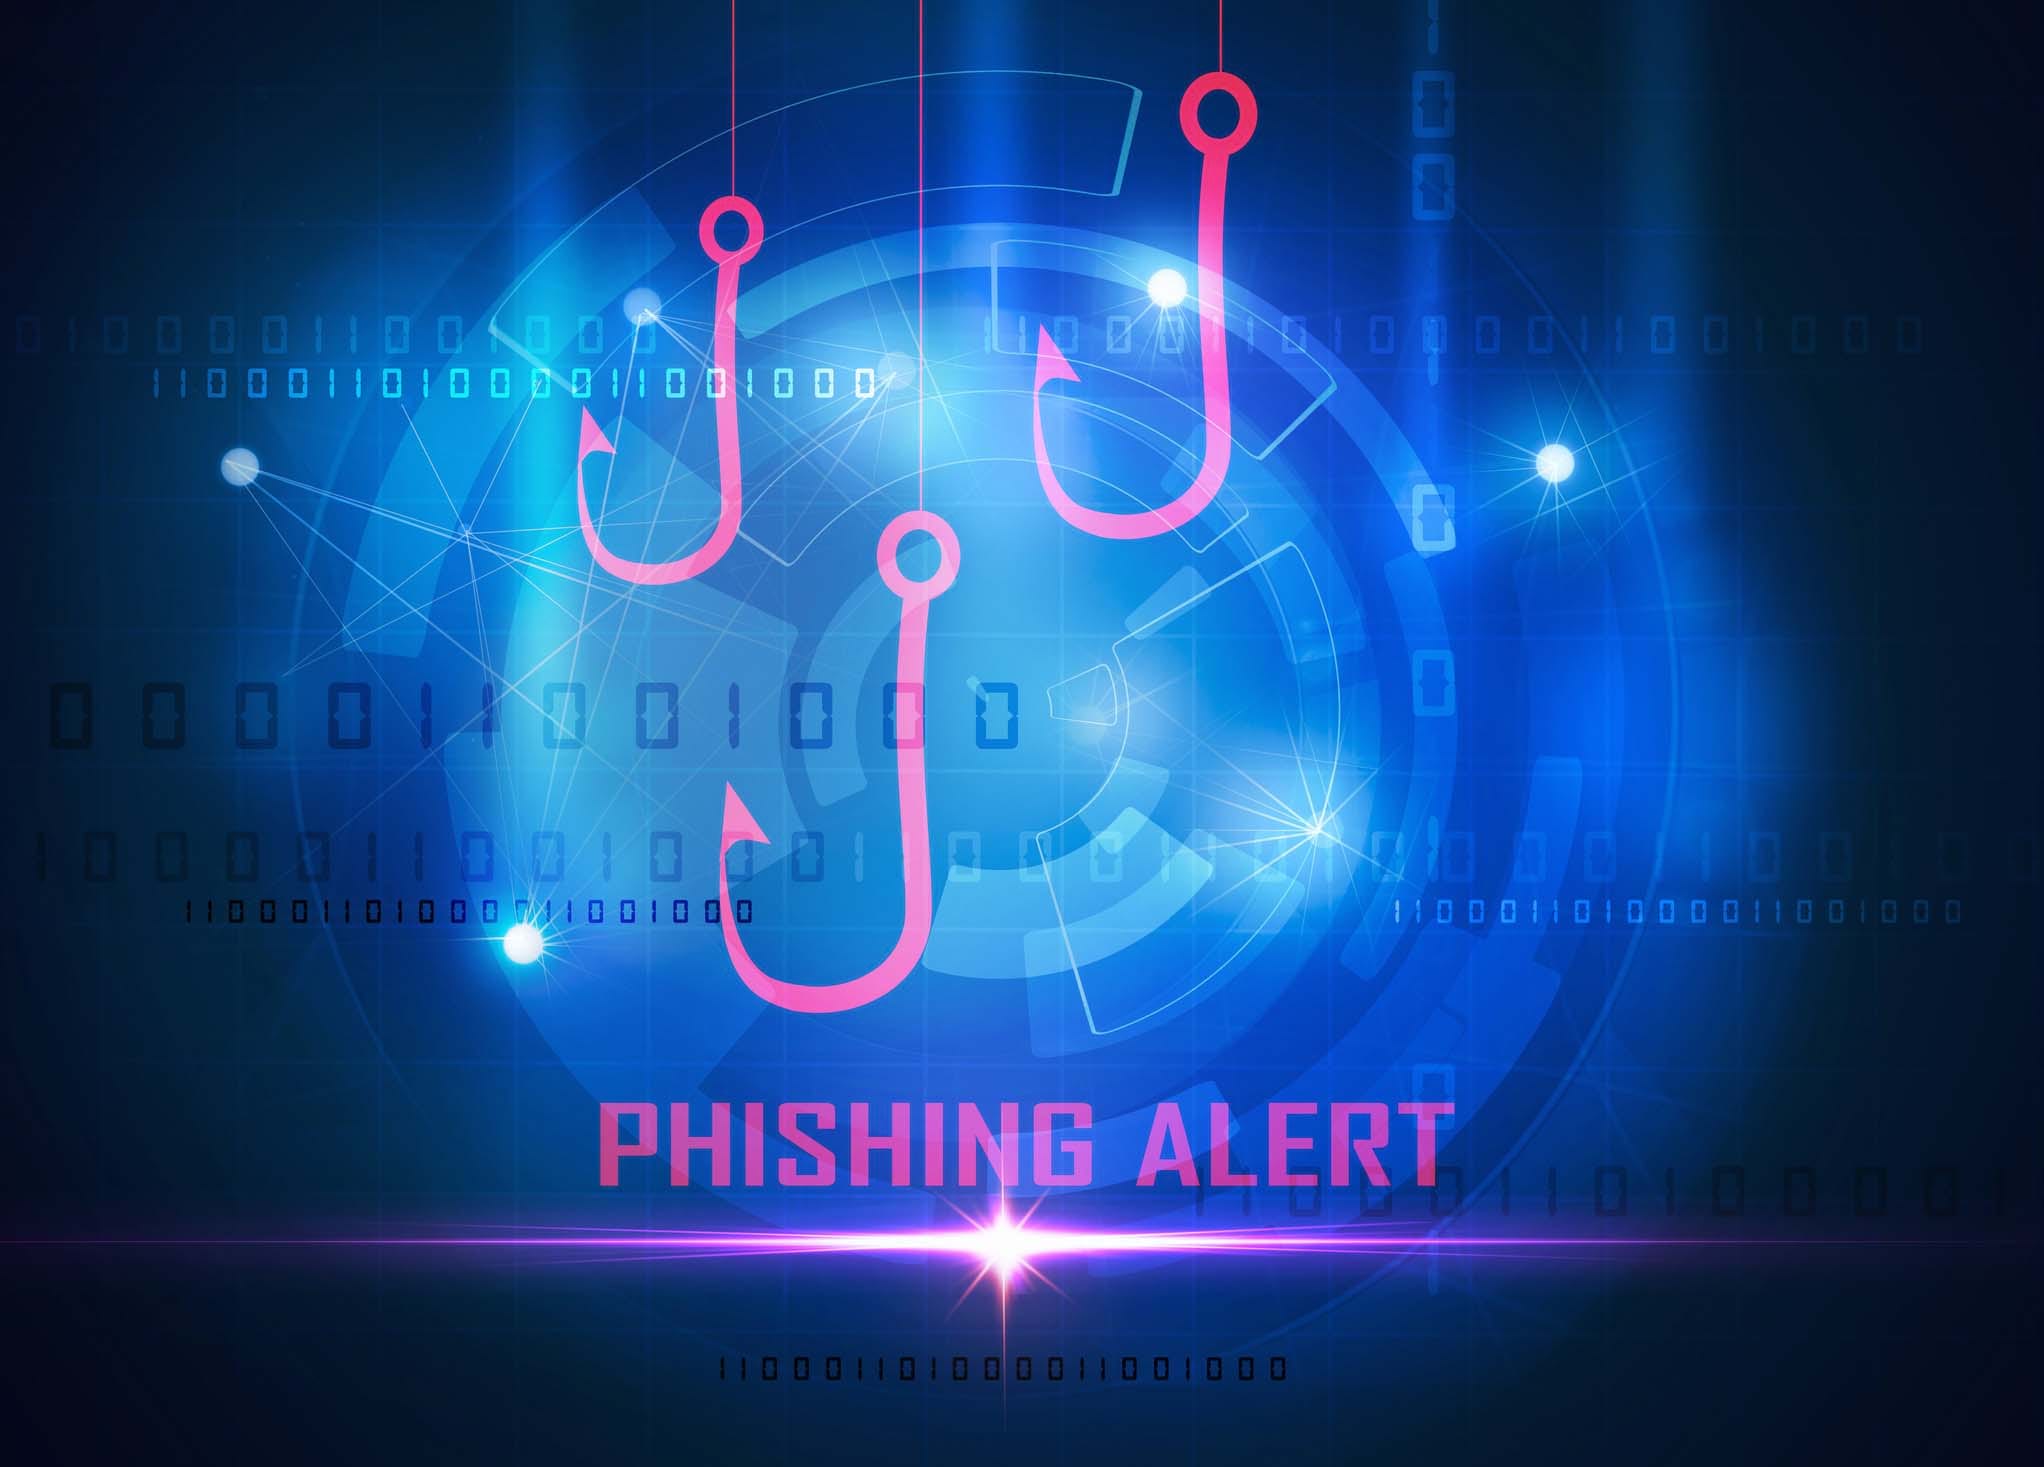 beware of phishing scams